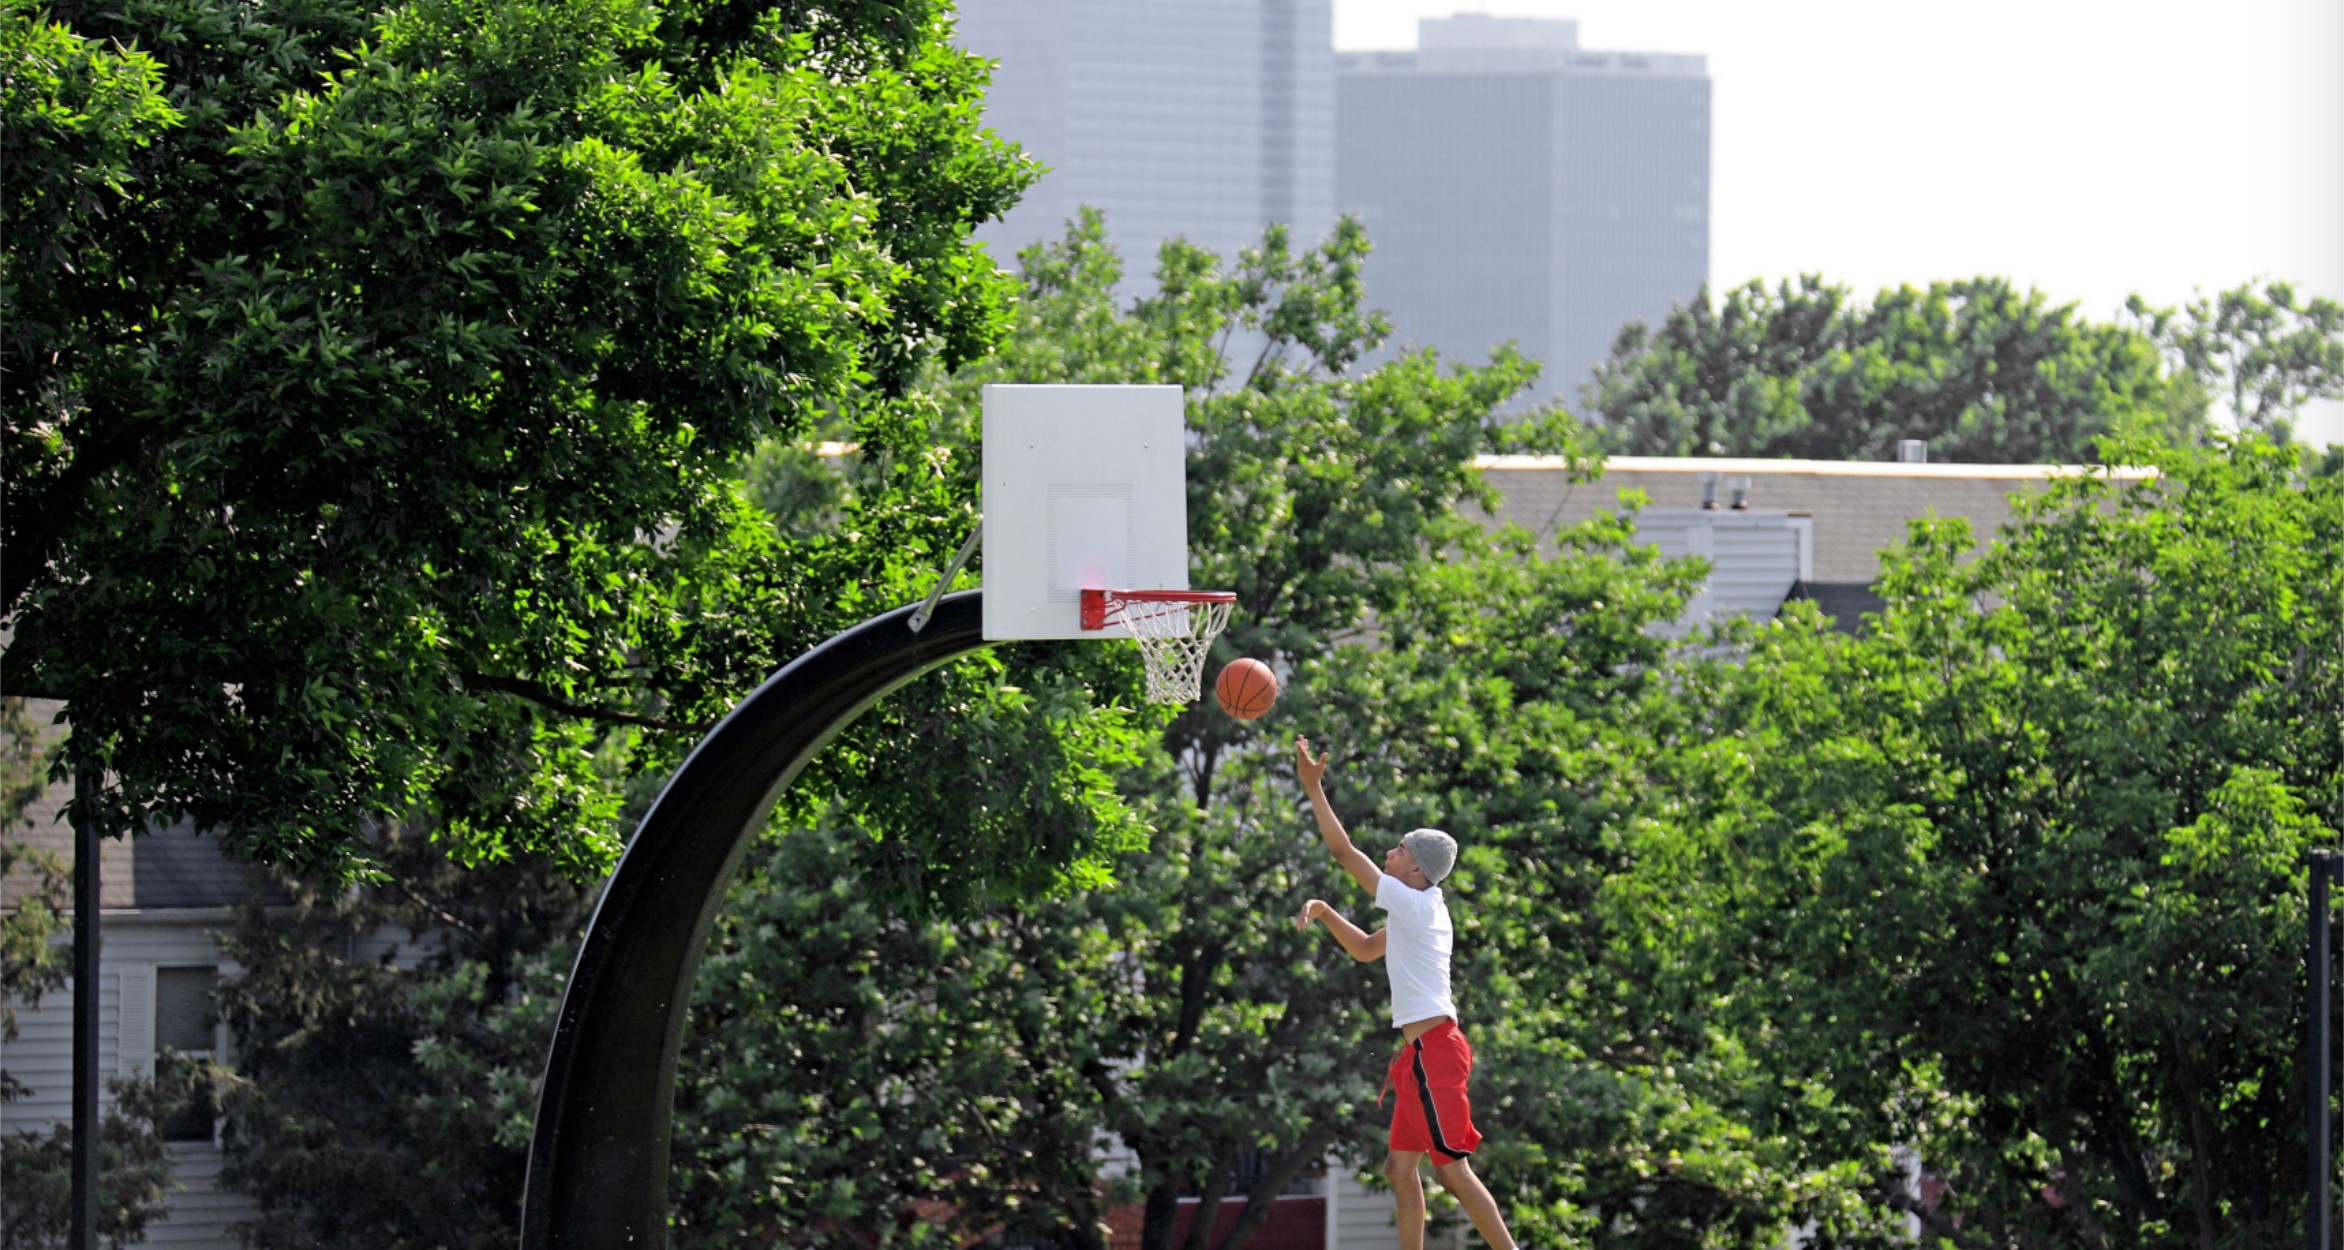 Playing basket ball in Prospect Kansas City